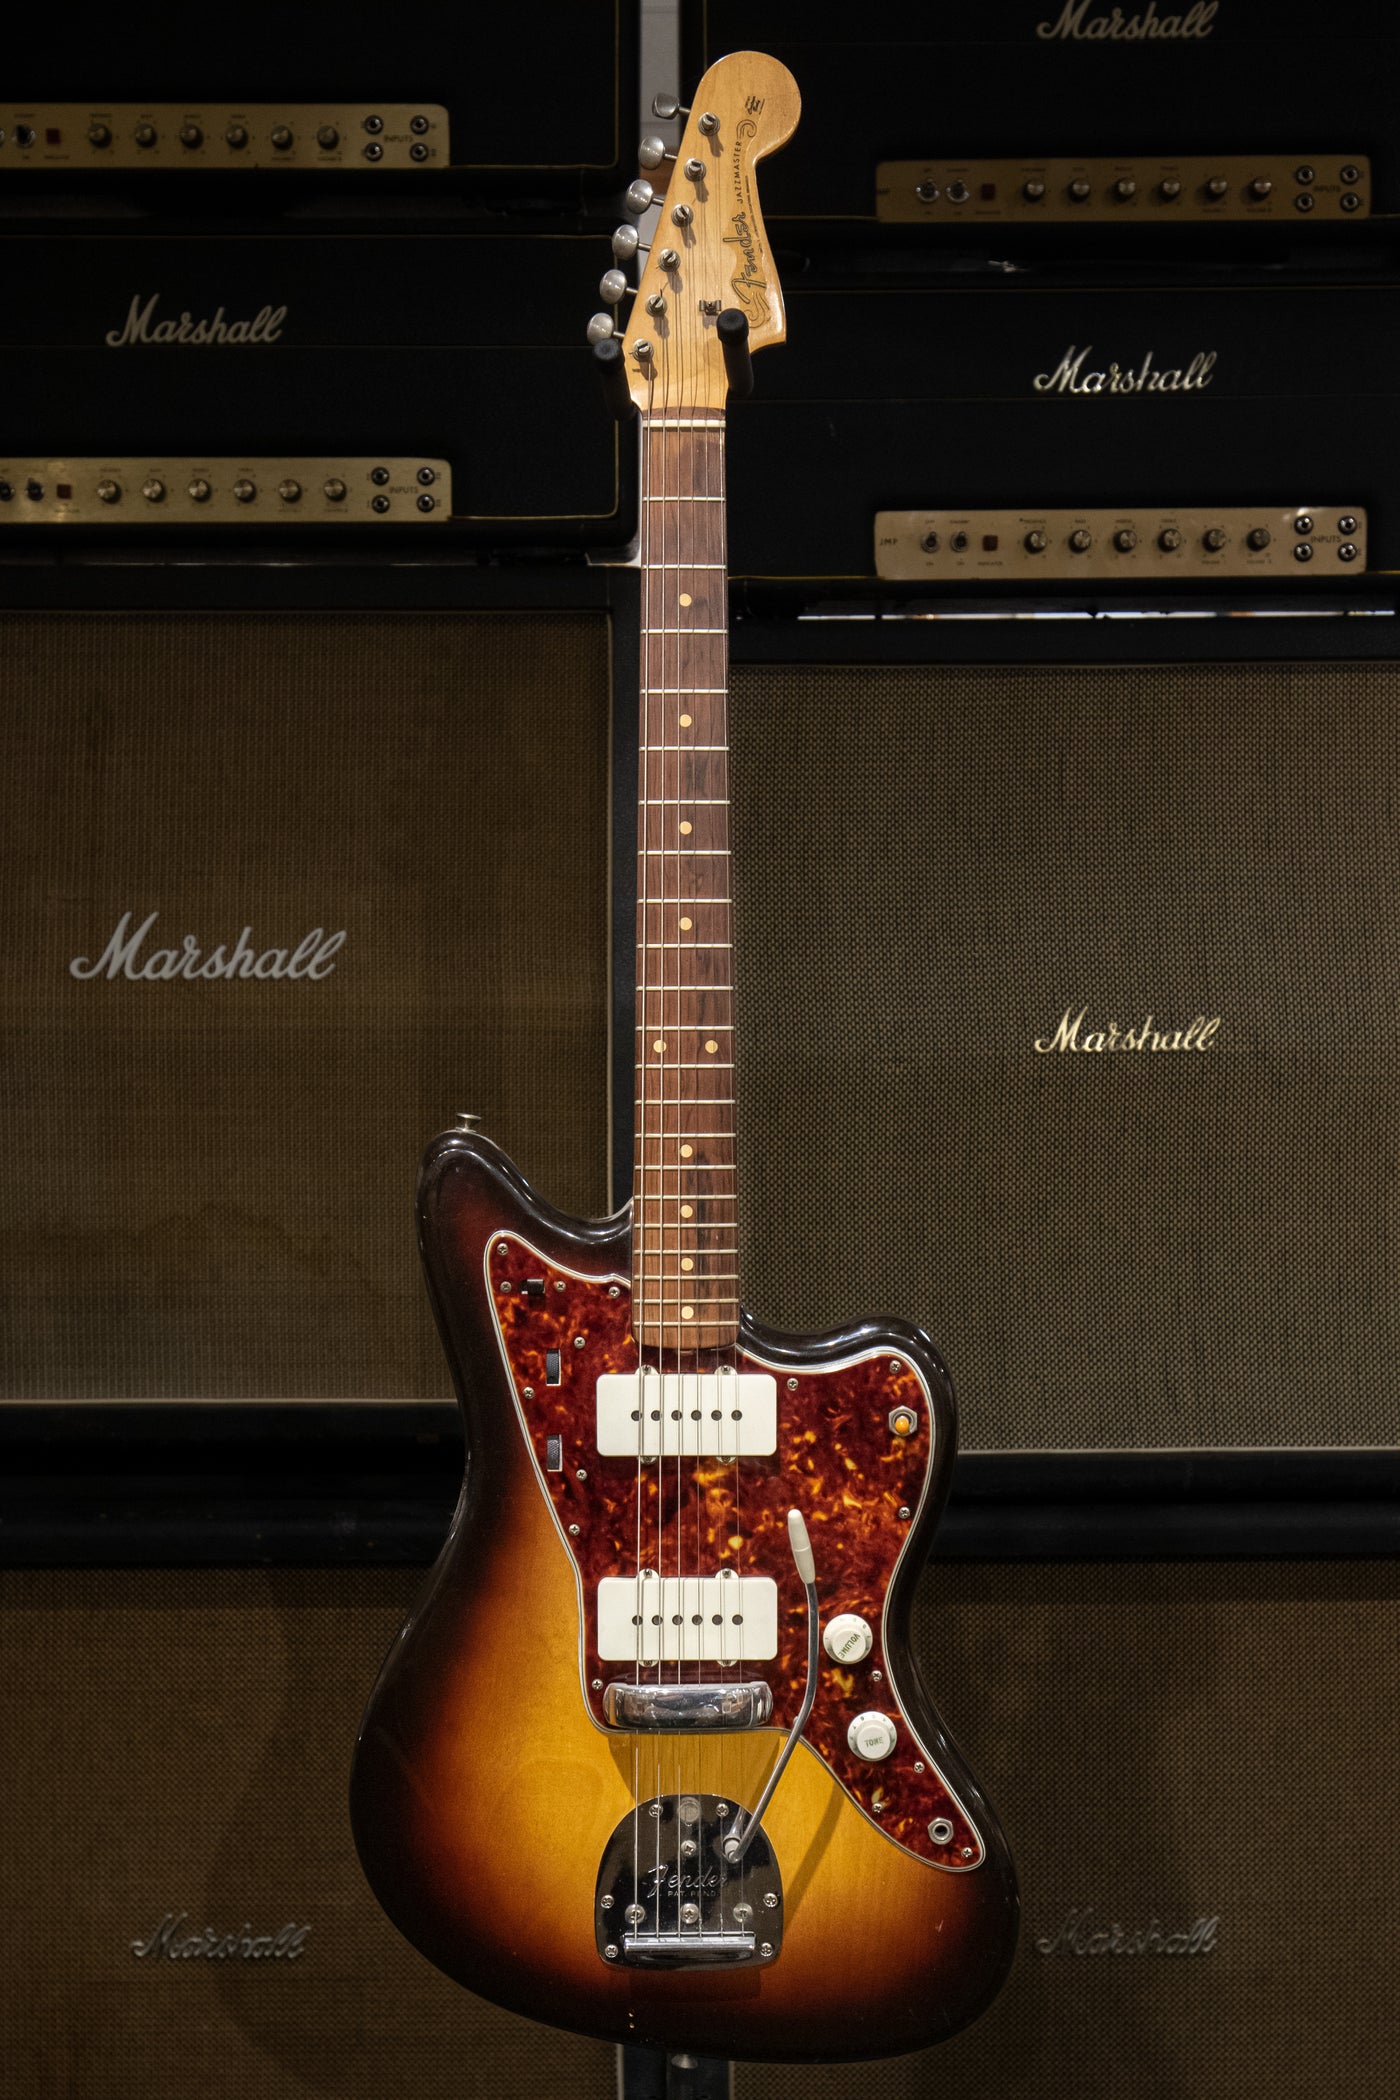 1959 Fender Jazzmaster - Sunburst